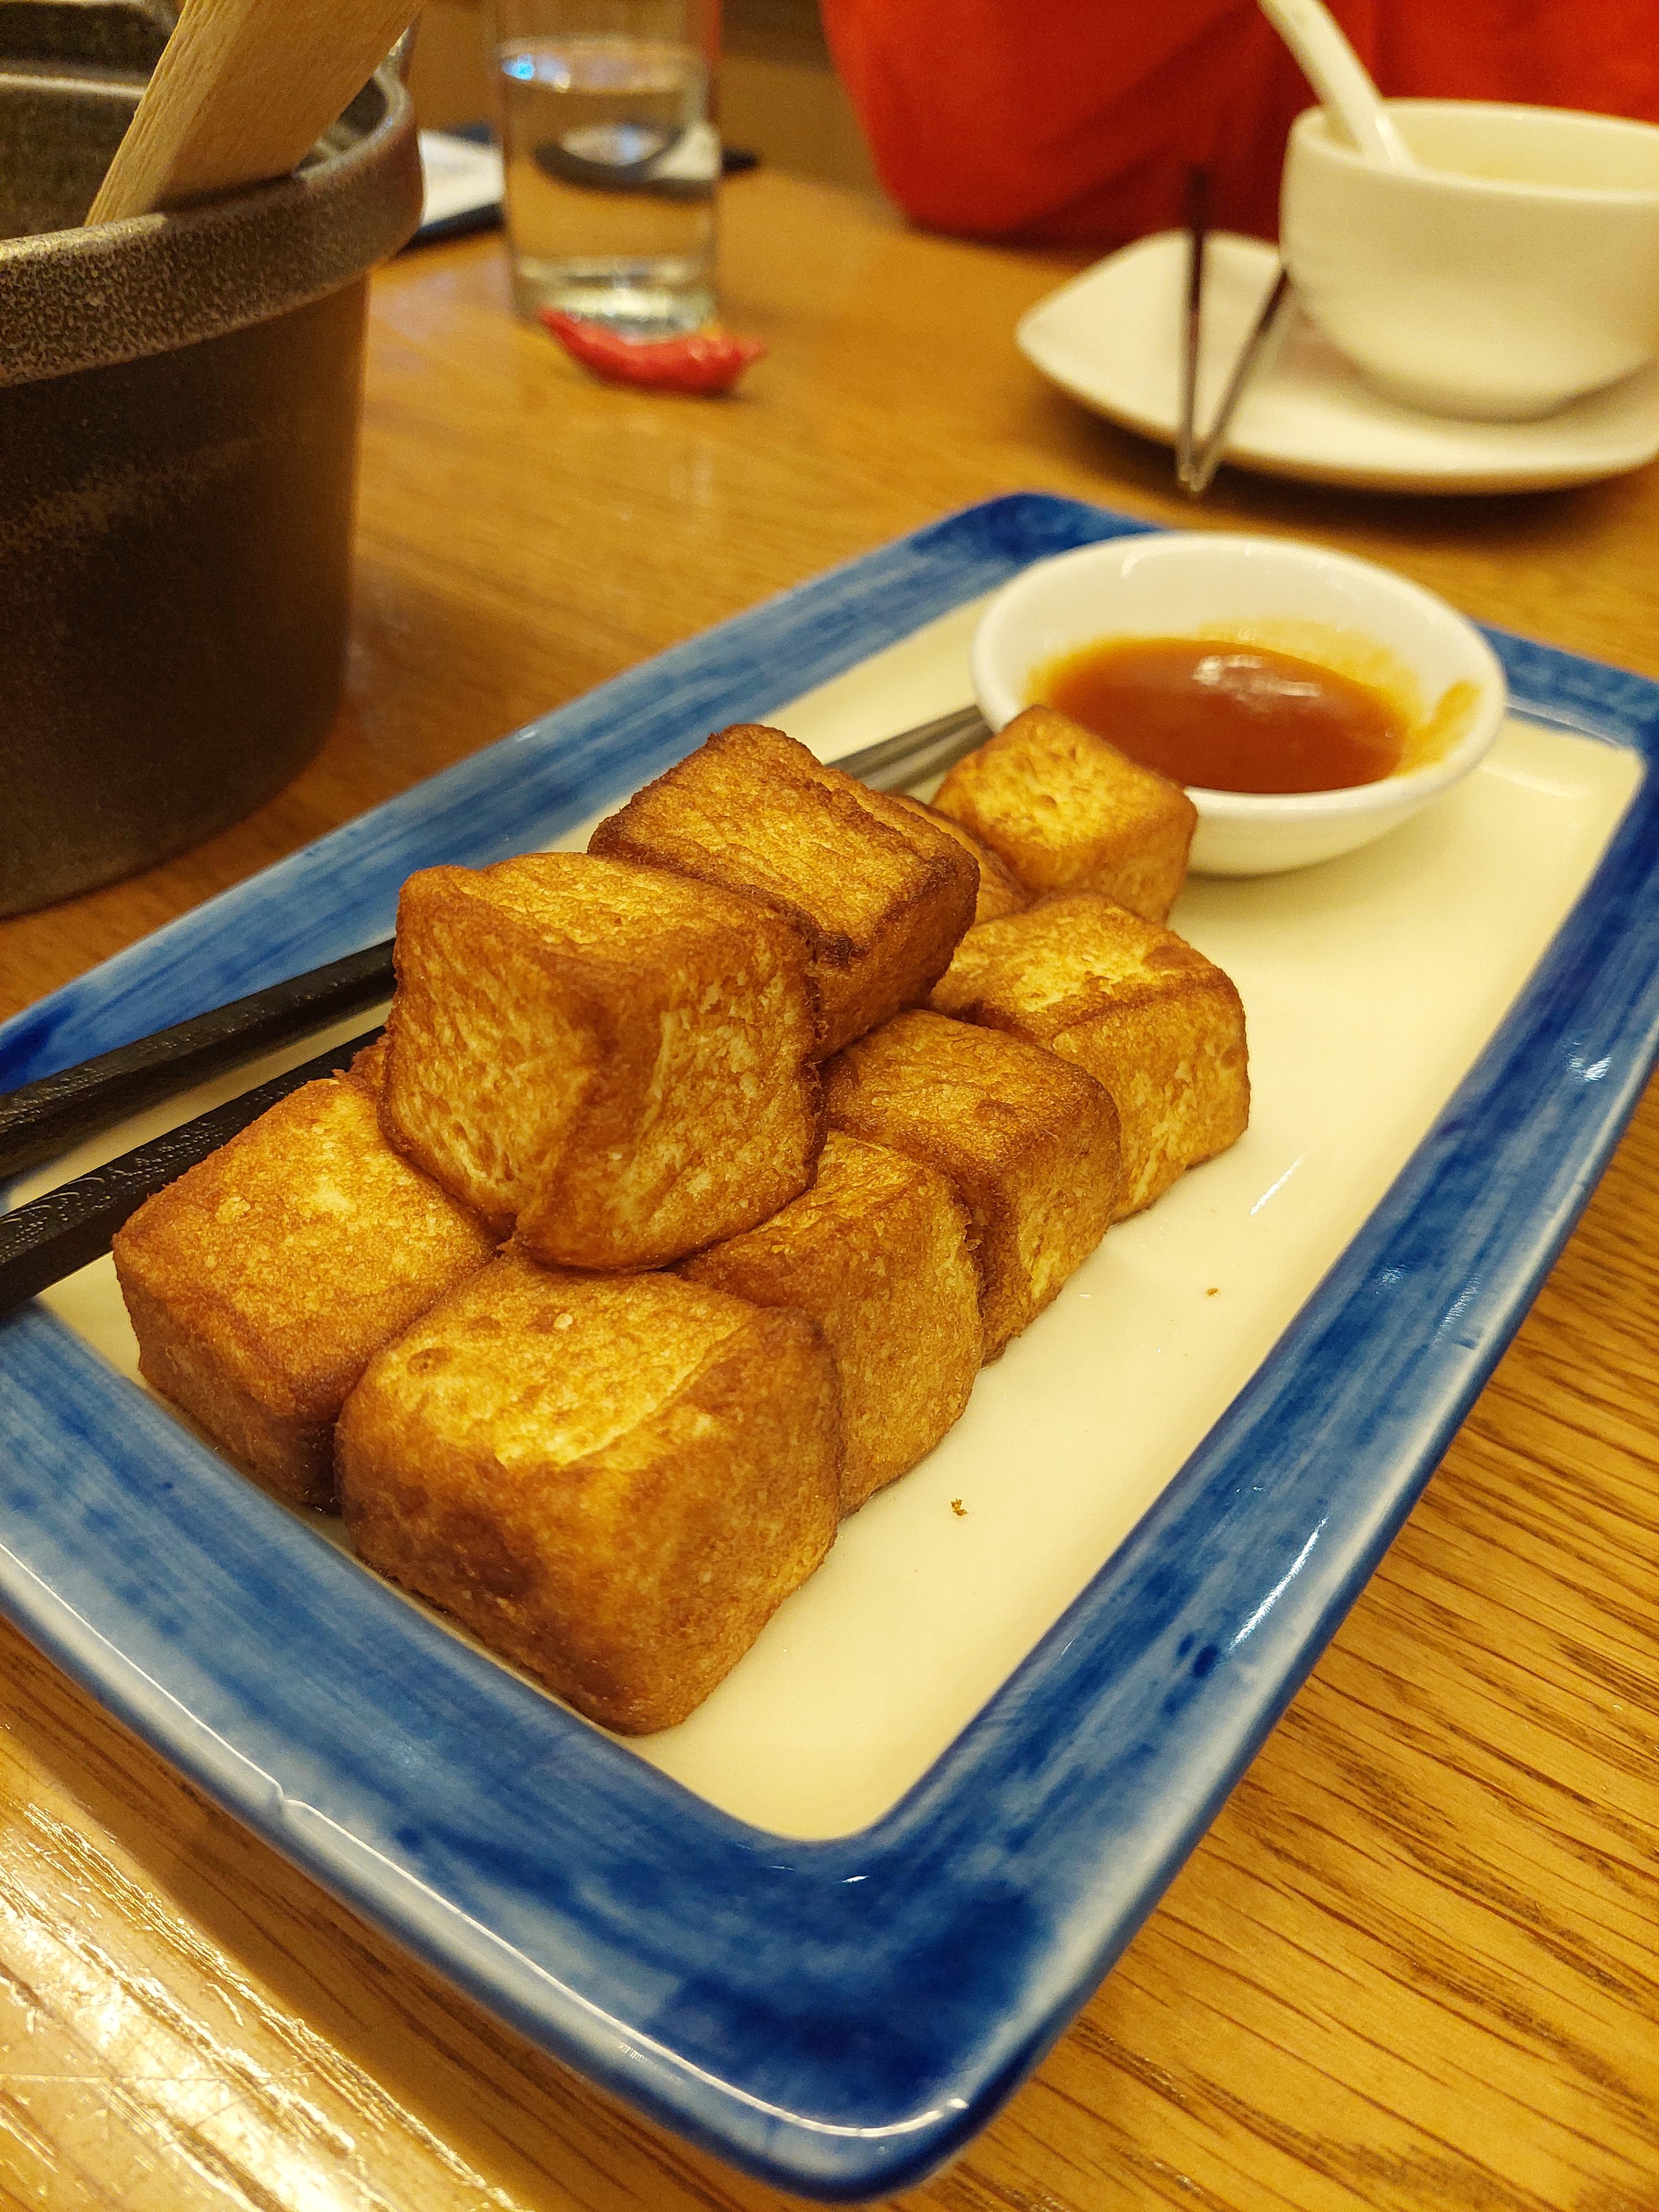 Pan fried tofu